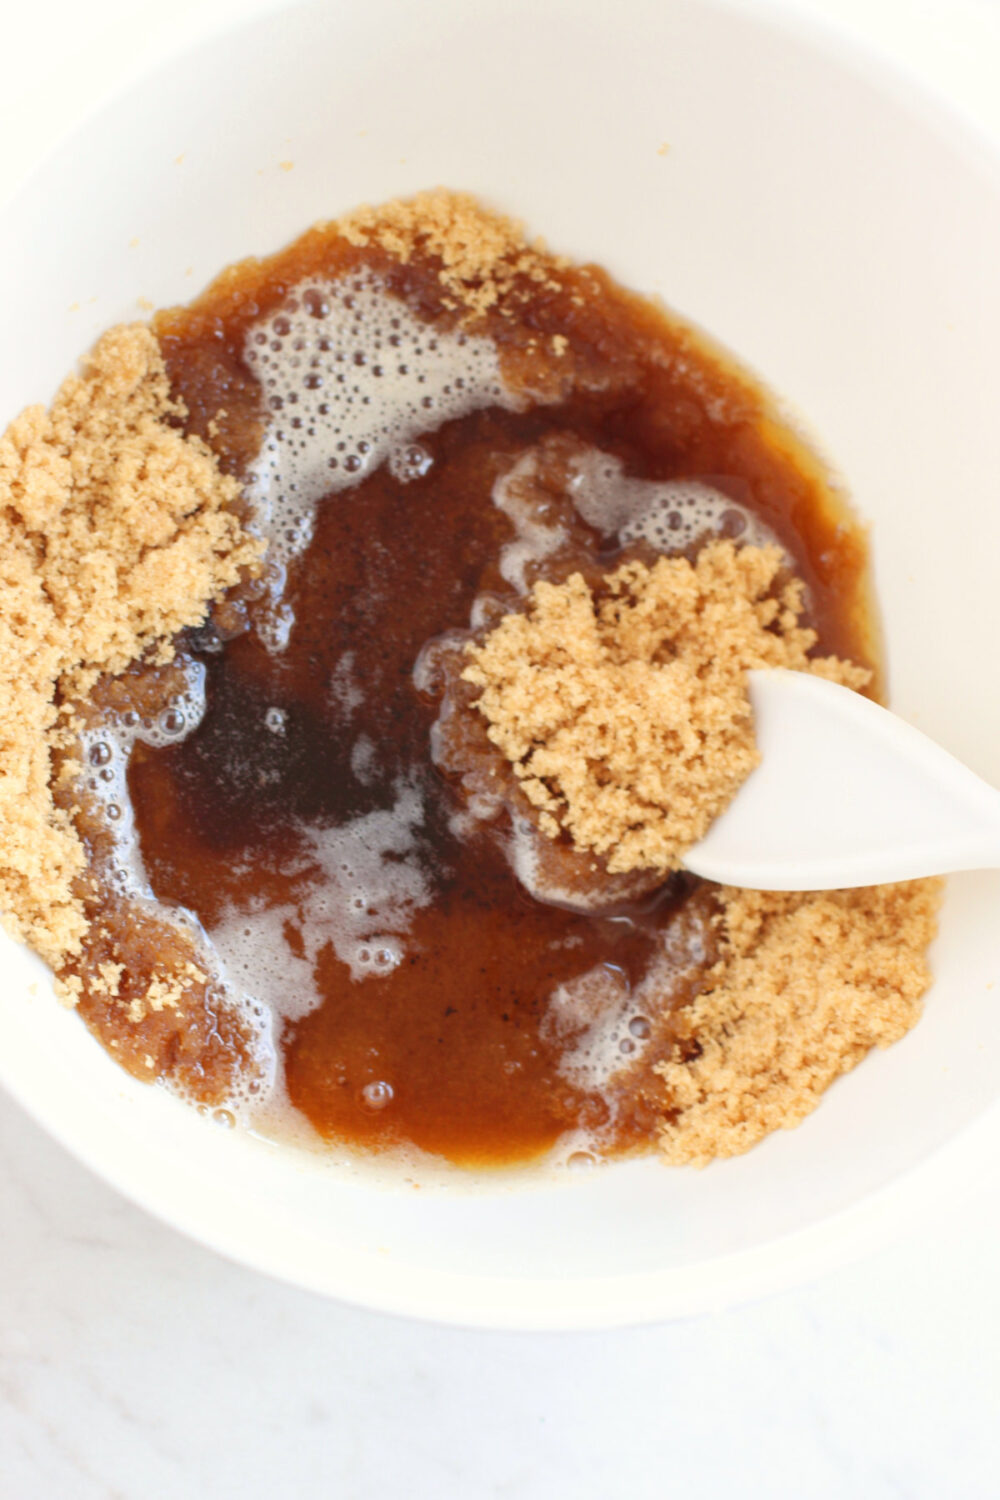 Brown sugar mixture in a bowl. 